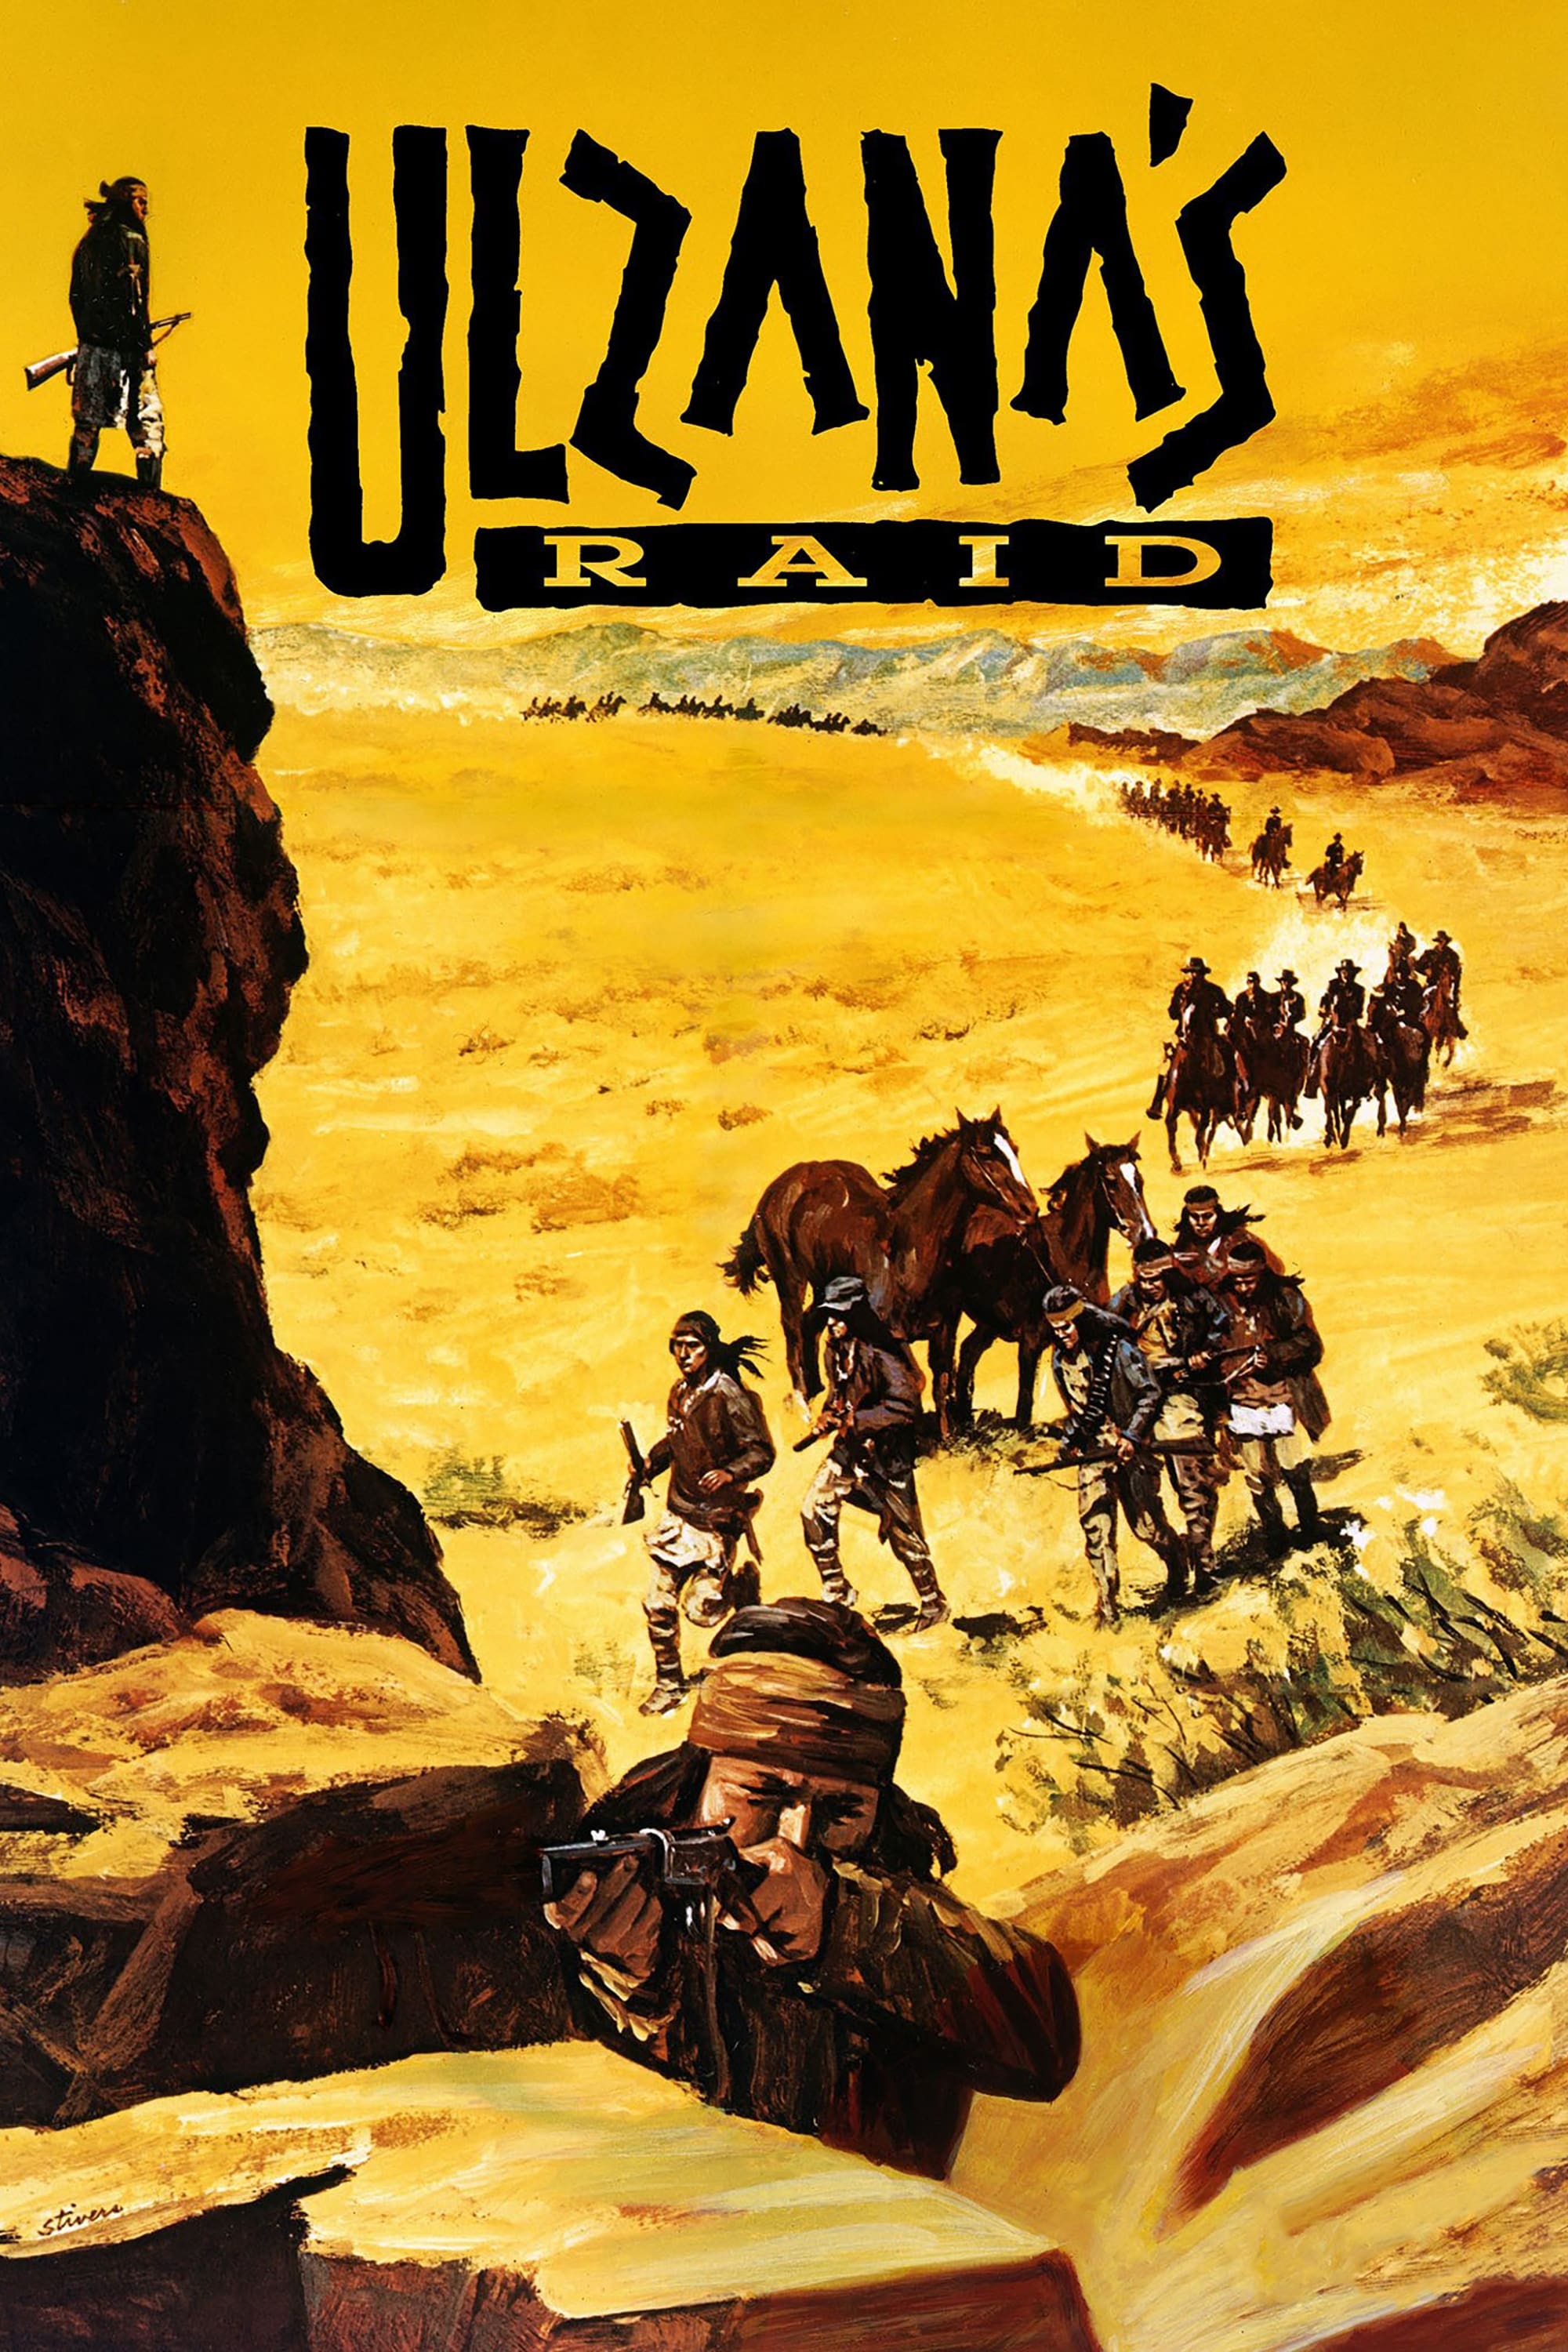 Ulzana's Raid (1972)